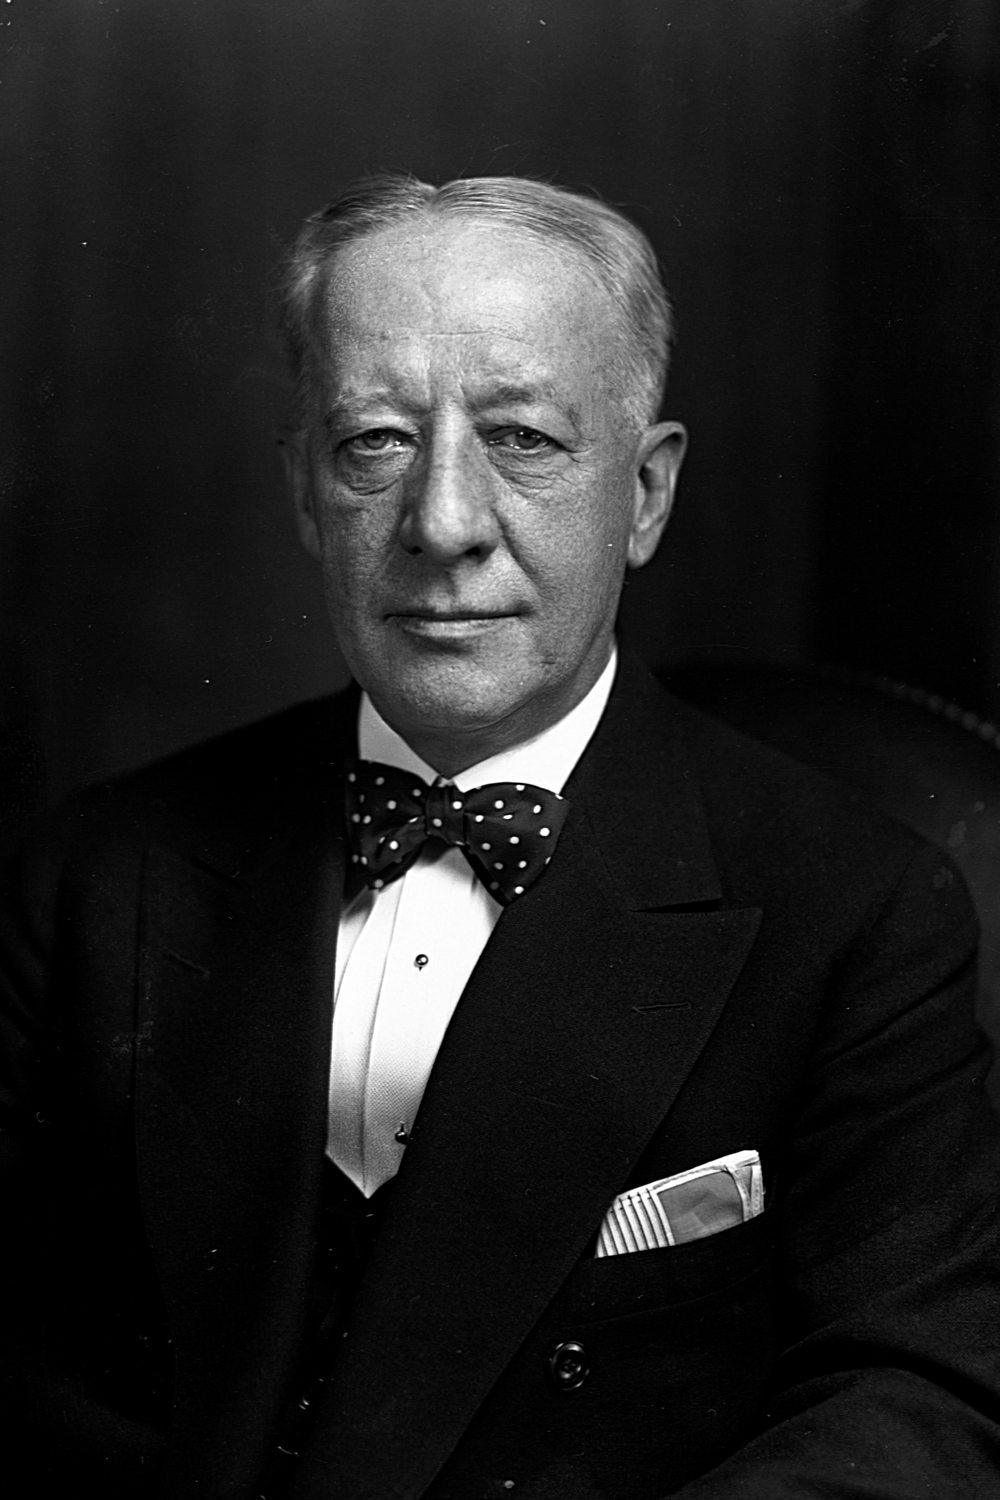 A photo of Alfred E. Smith